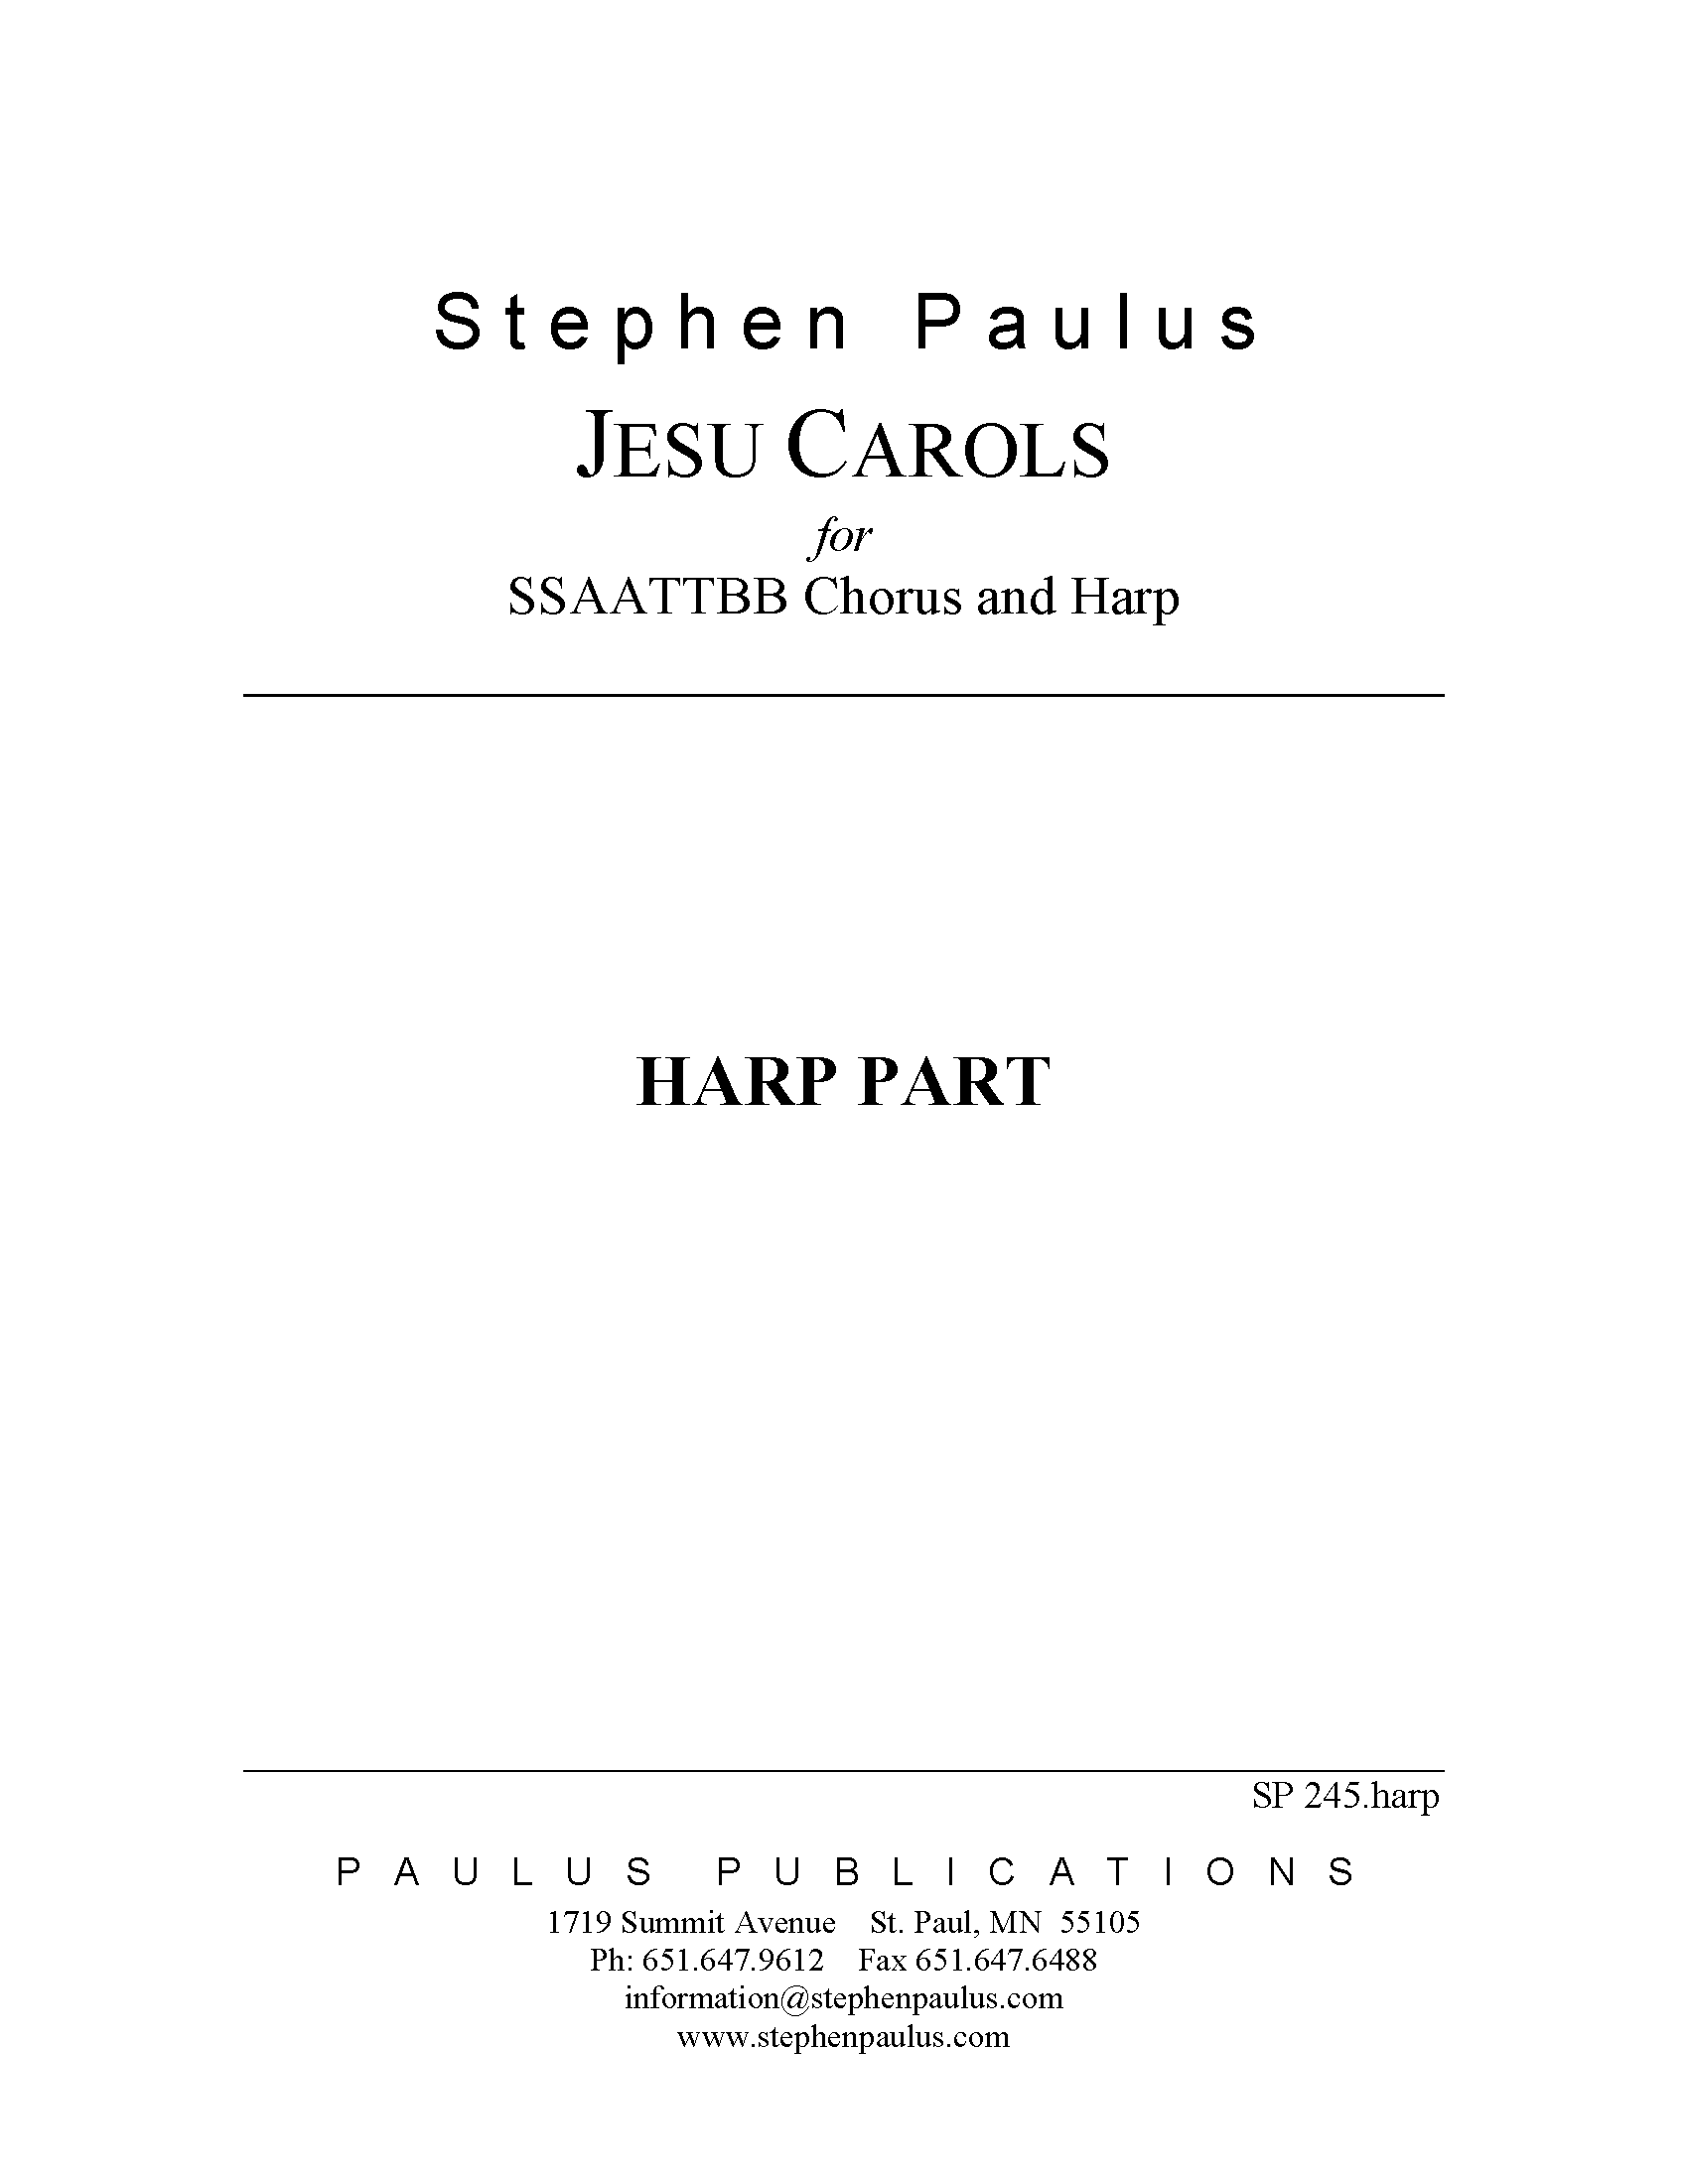 Jesu Carols - Harp Part for SSAATTBB Chorus & Harp